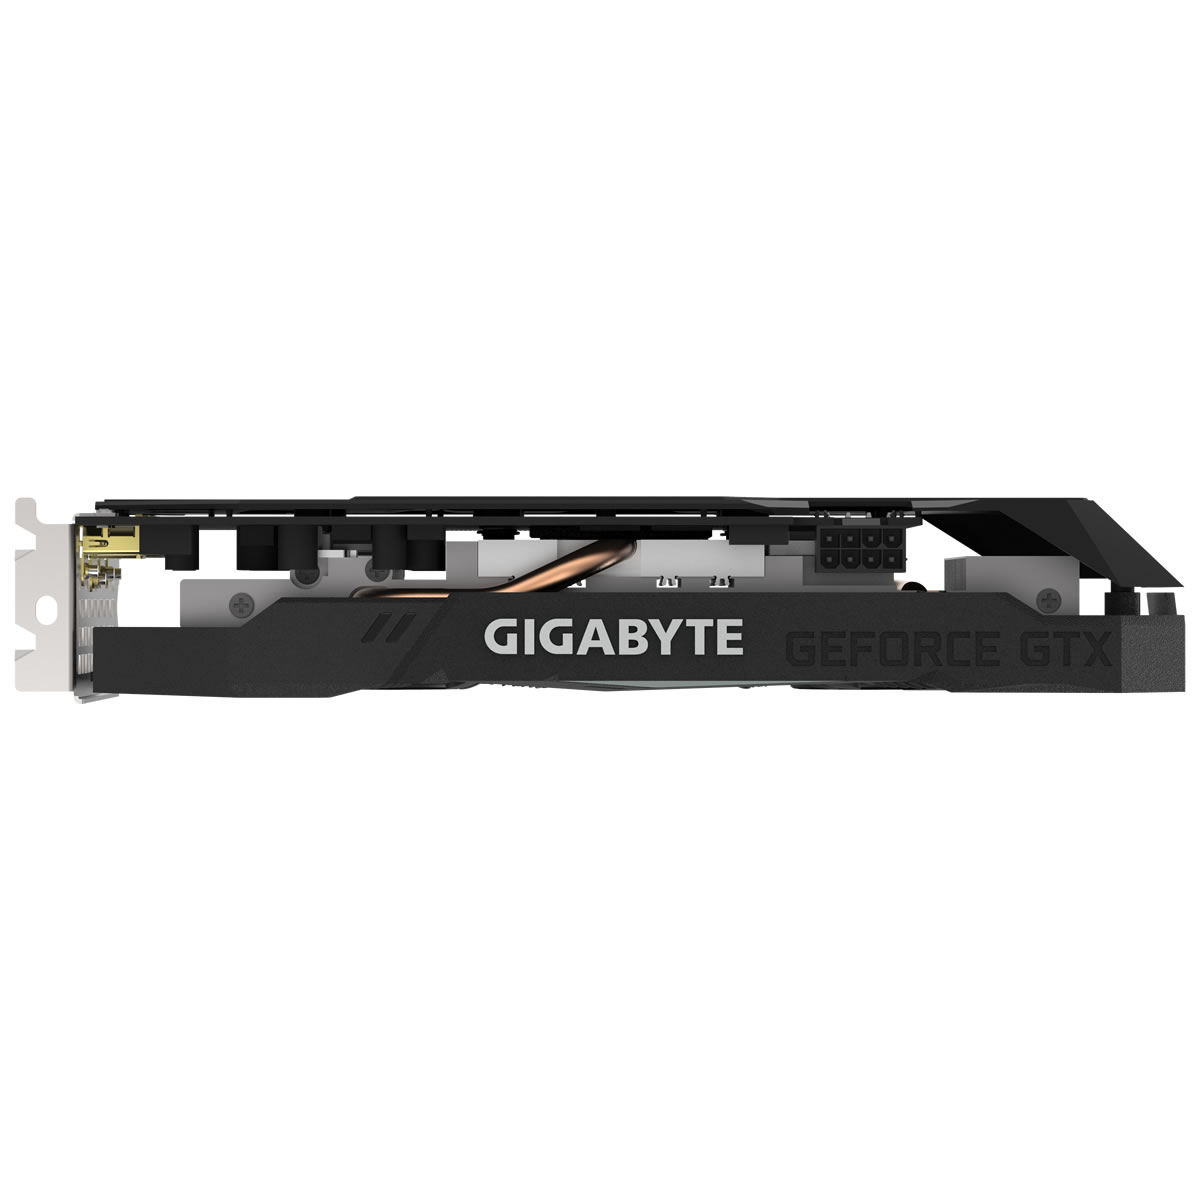 Gigabyte - Gigabyte GeForce GTX 1660Ti OC 6144MB GDDR6 PCI-Express Graphics Card